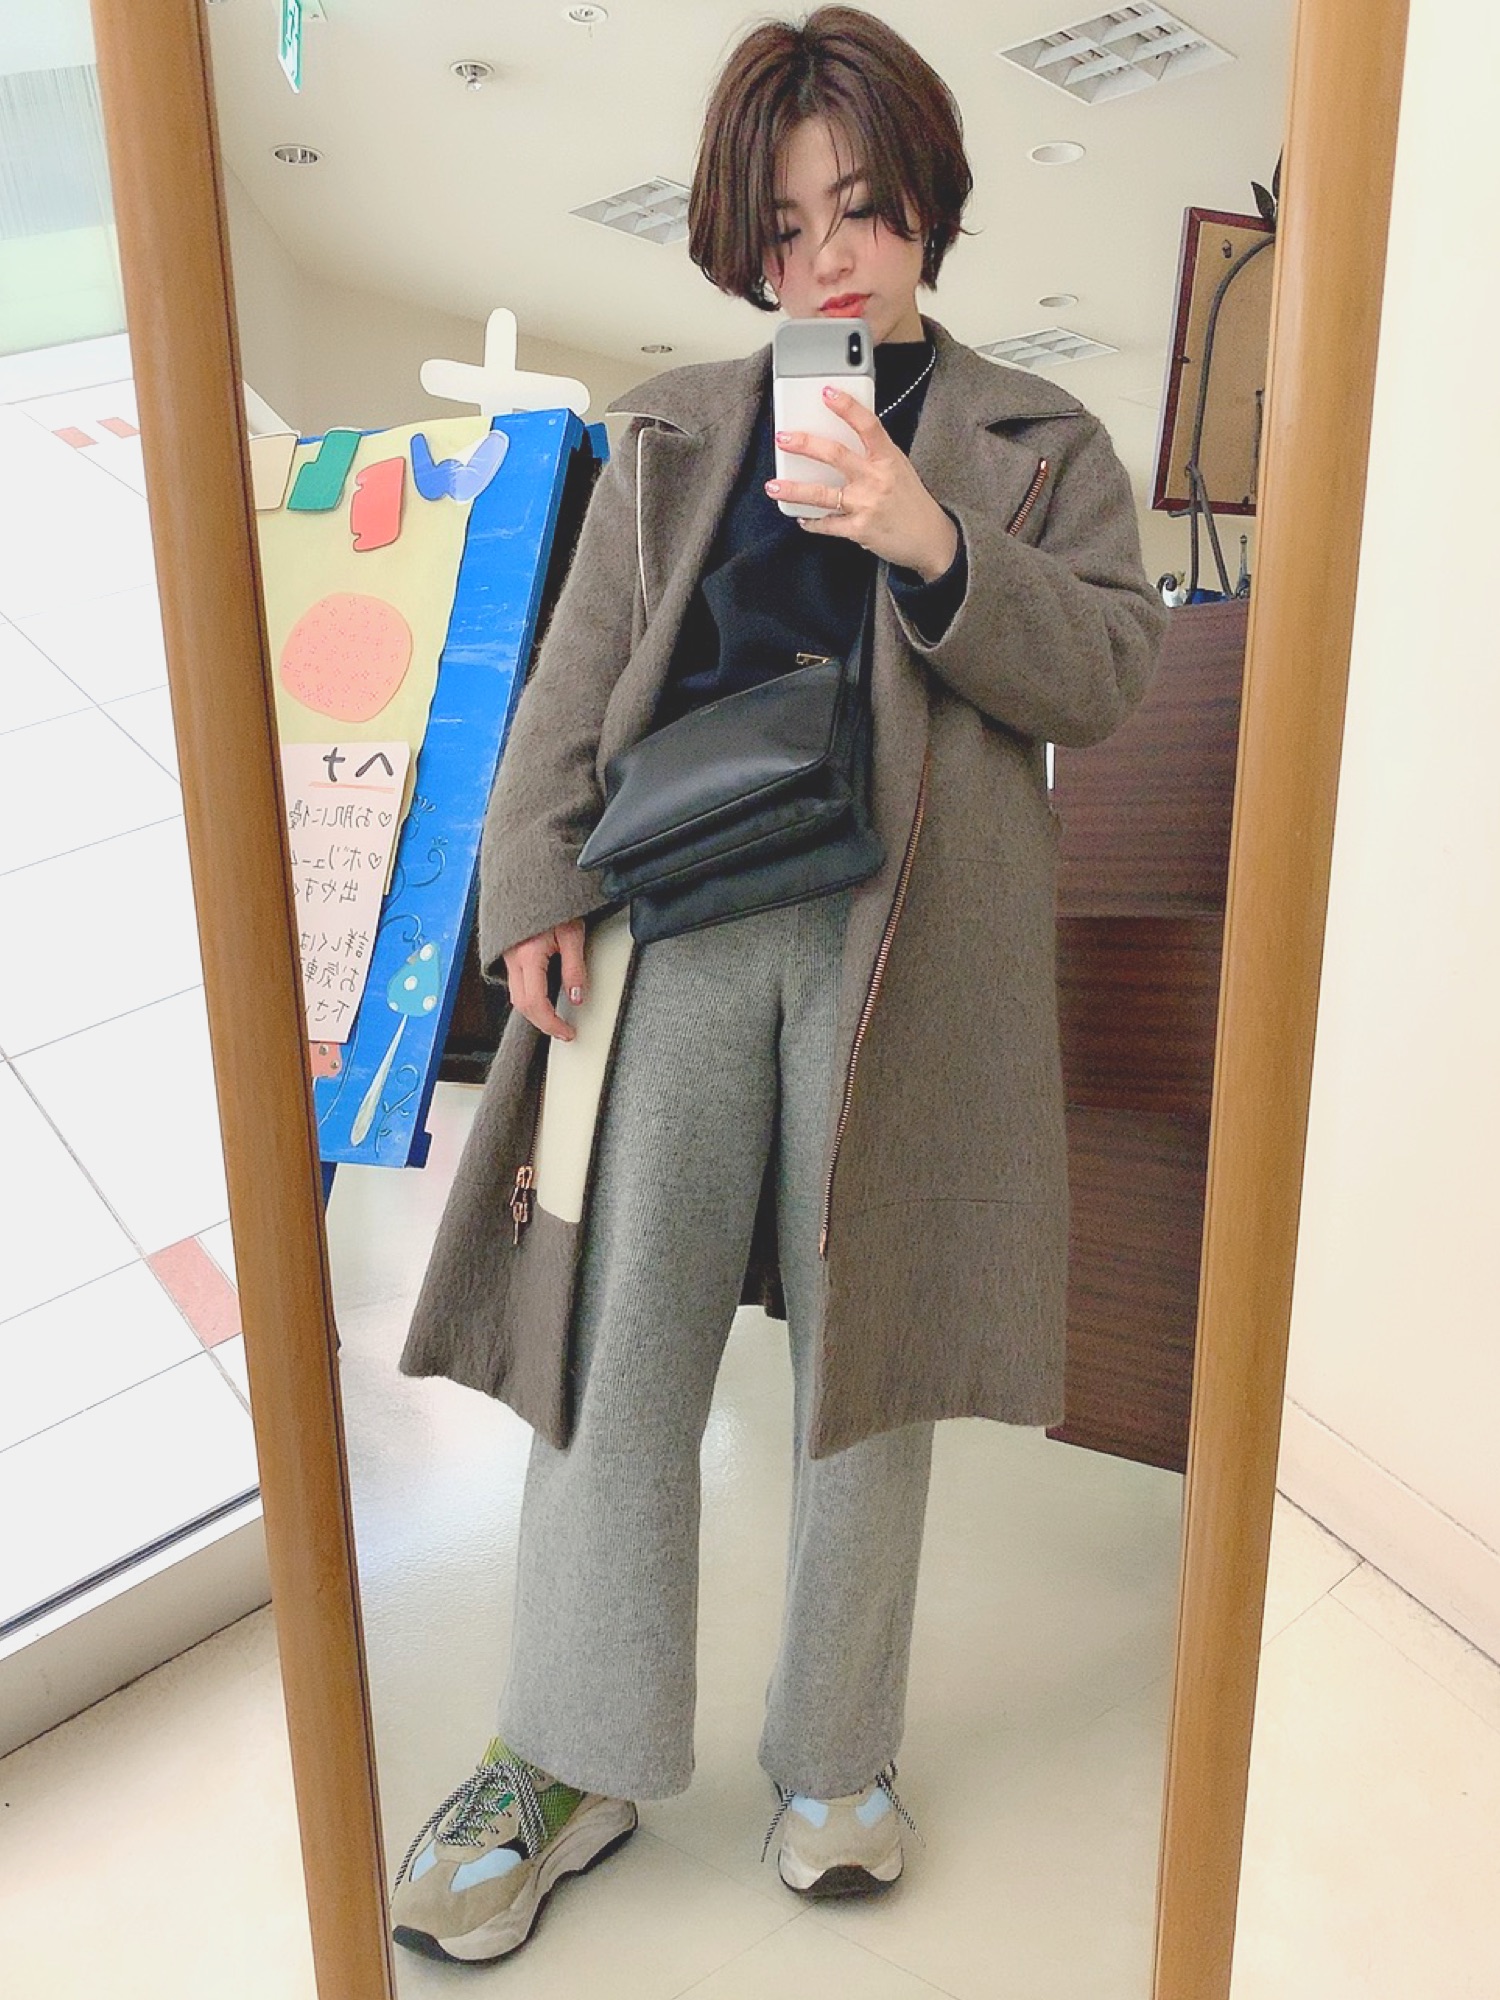 muller of yoshiokuboのチェスターコートを使った人気ファッション